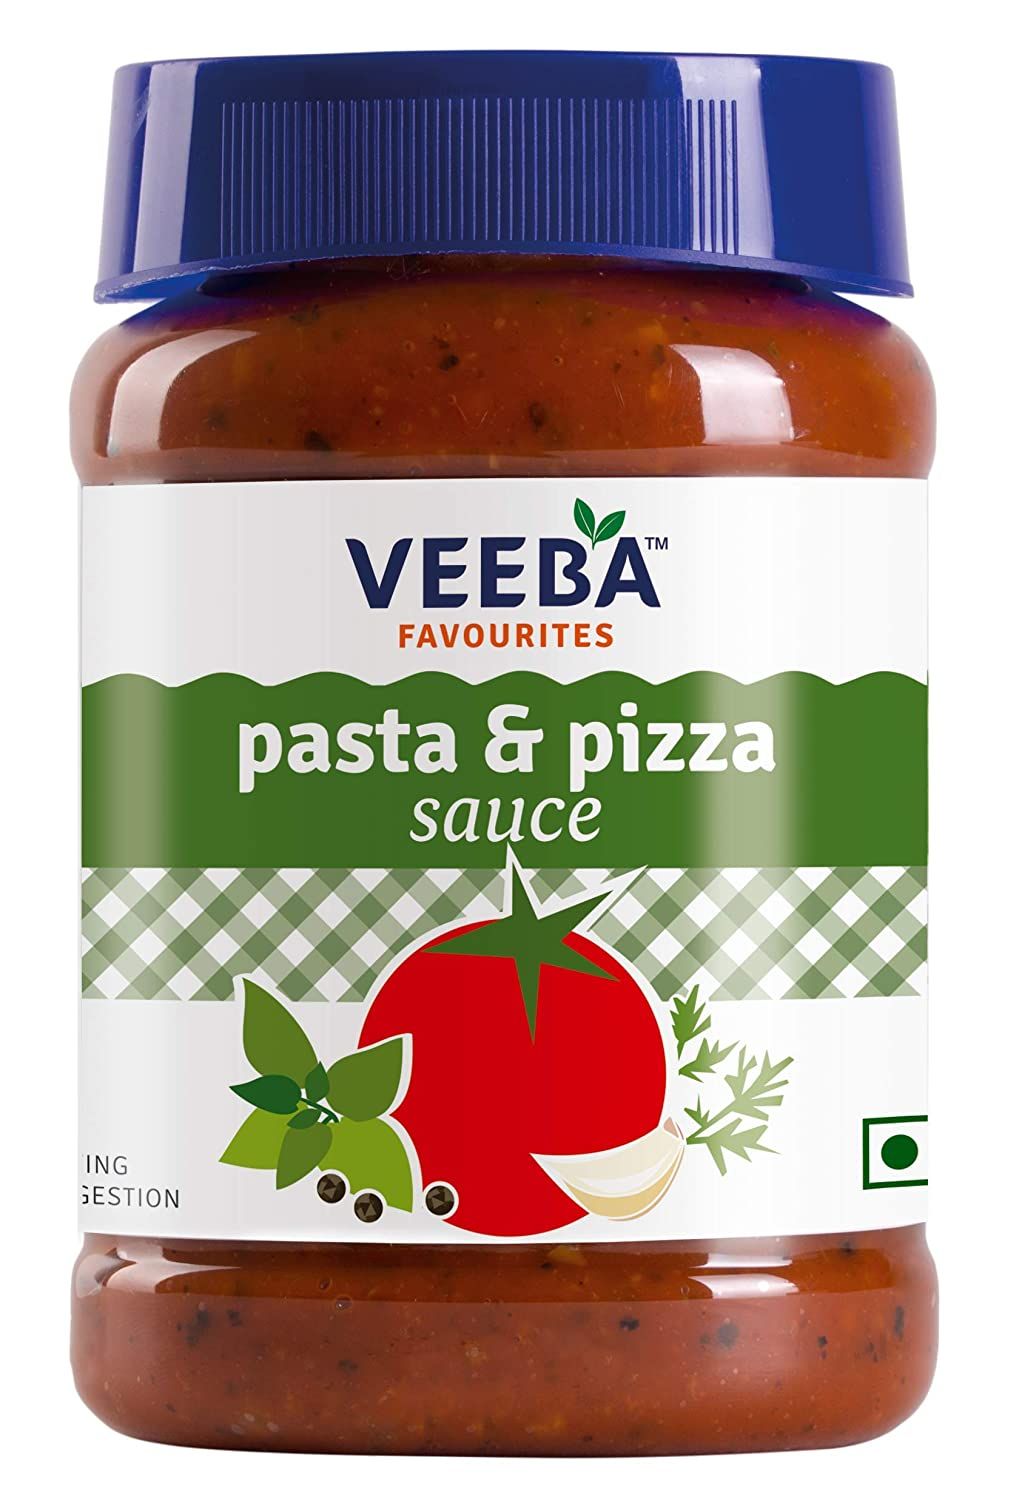 Veeba Pasta & Pizza Sauce Image